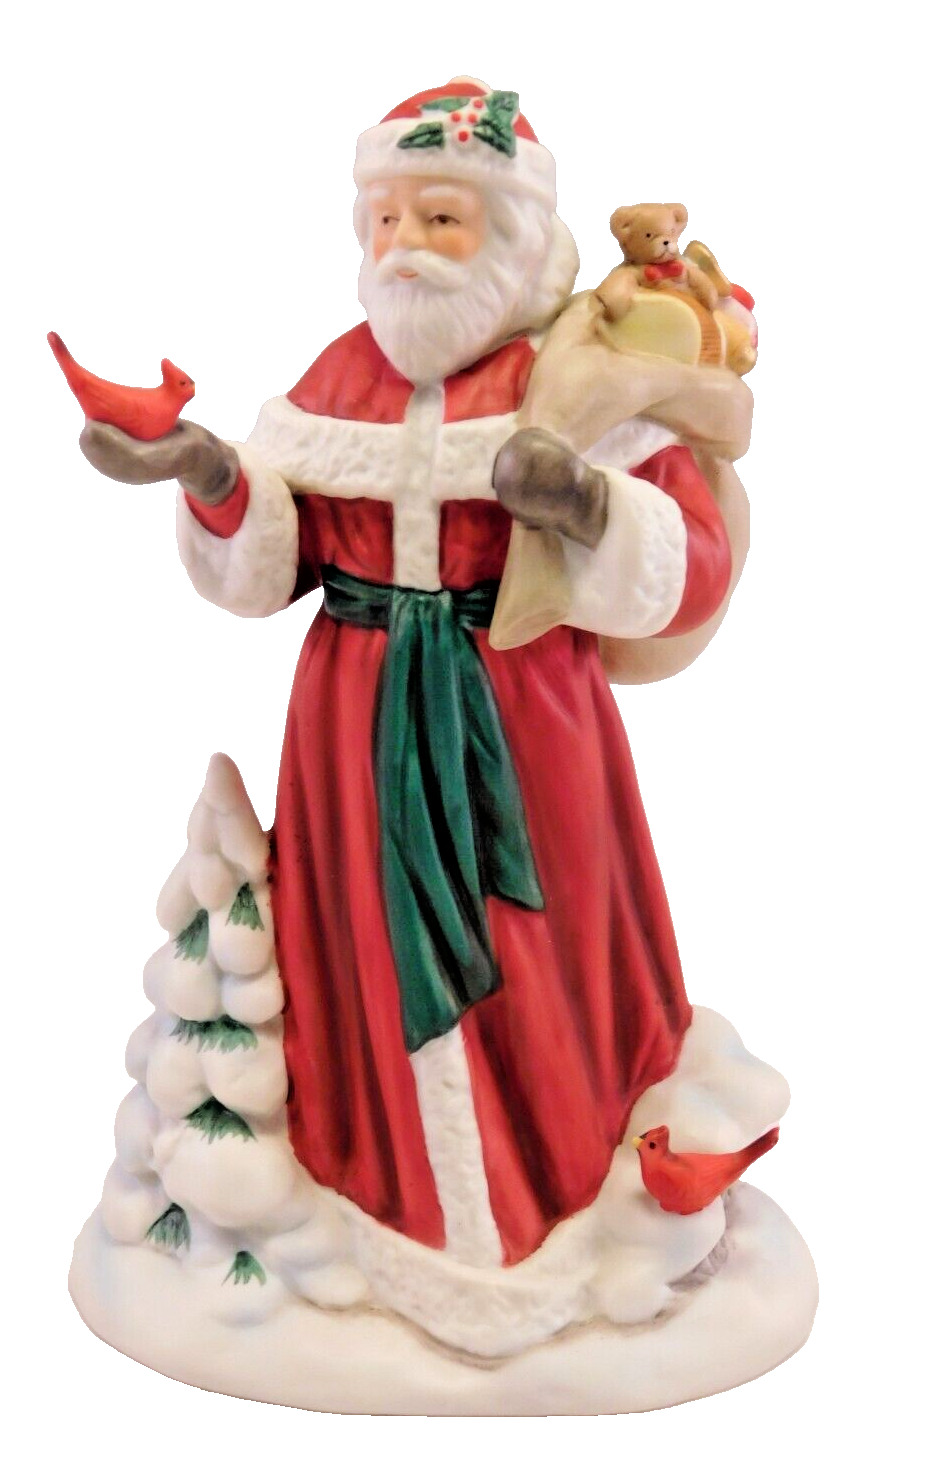 Father Christmas Porcelain Santa Claus Figurine Holds Sack of Toys Vintage Avon